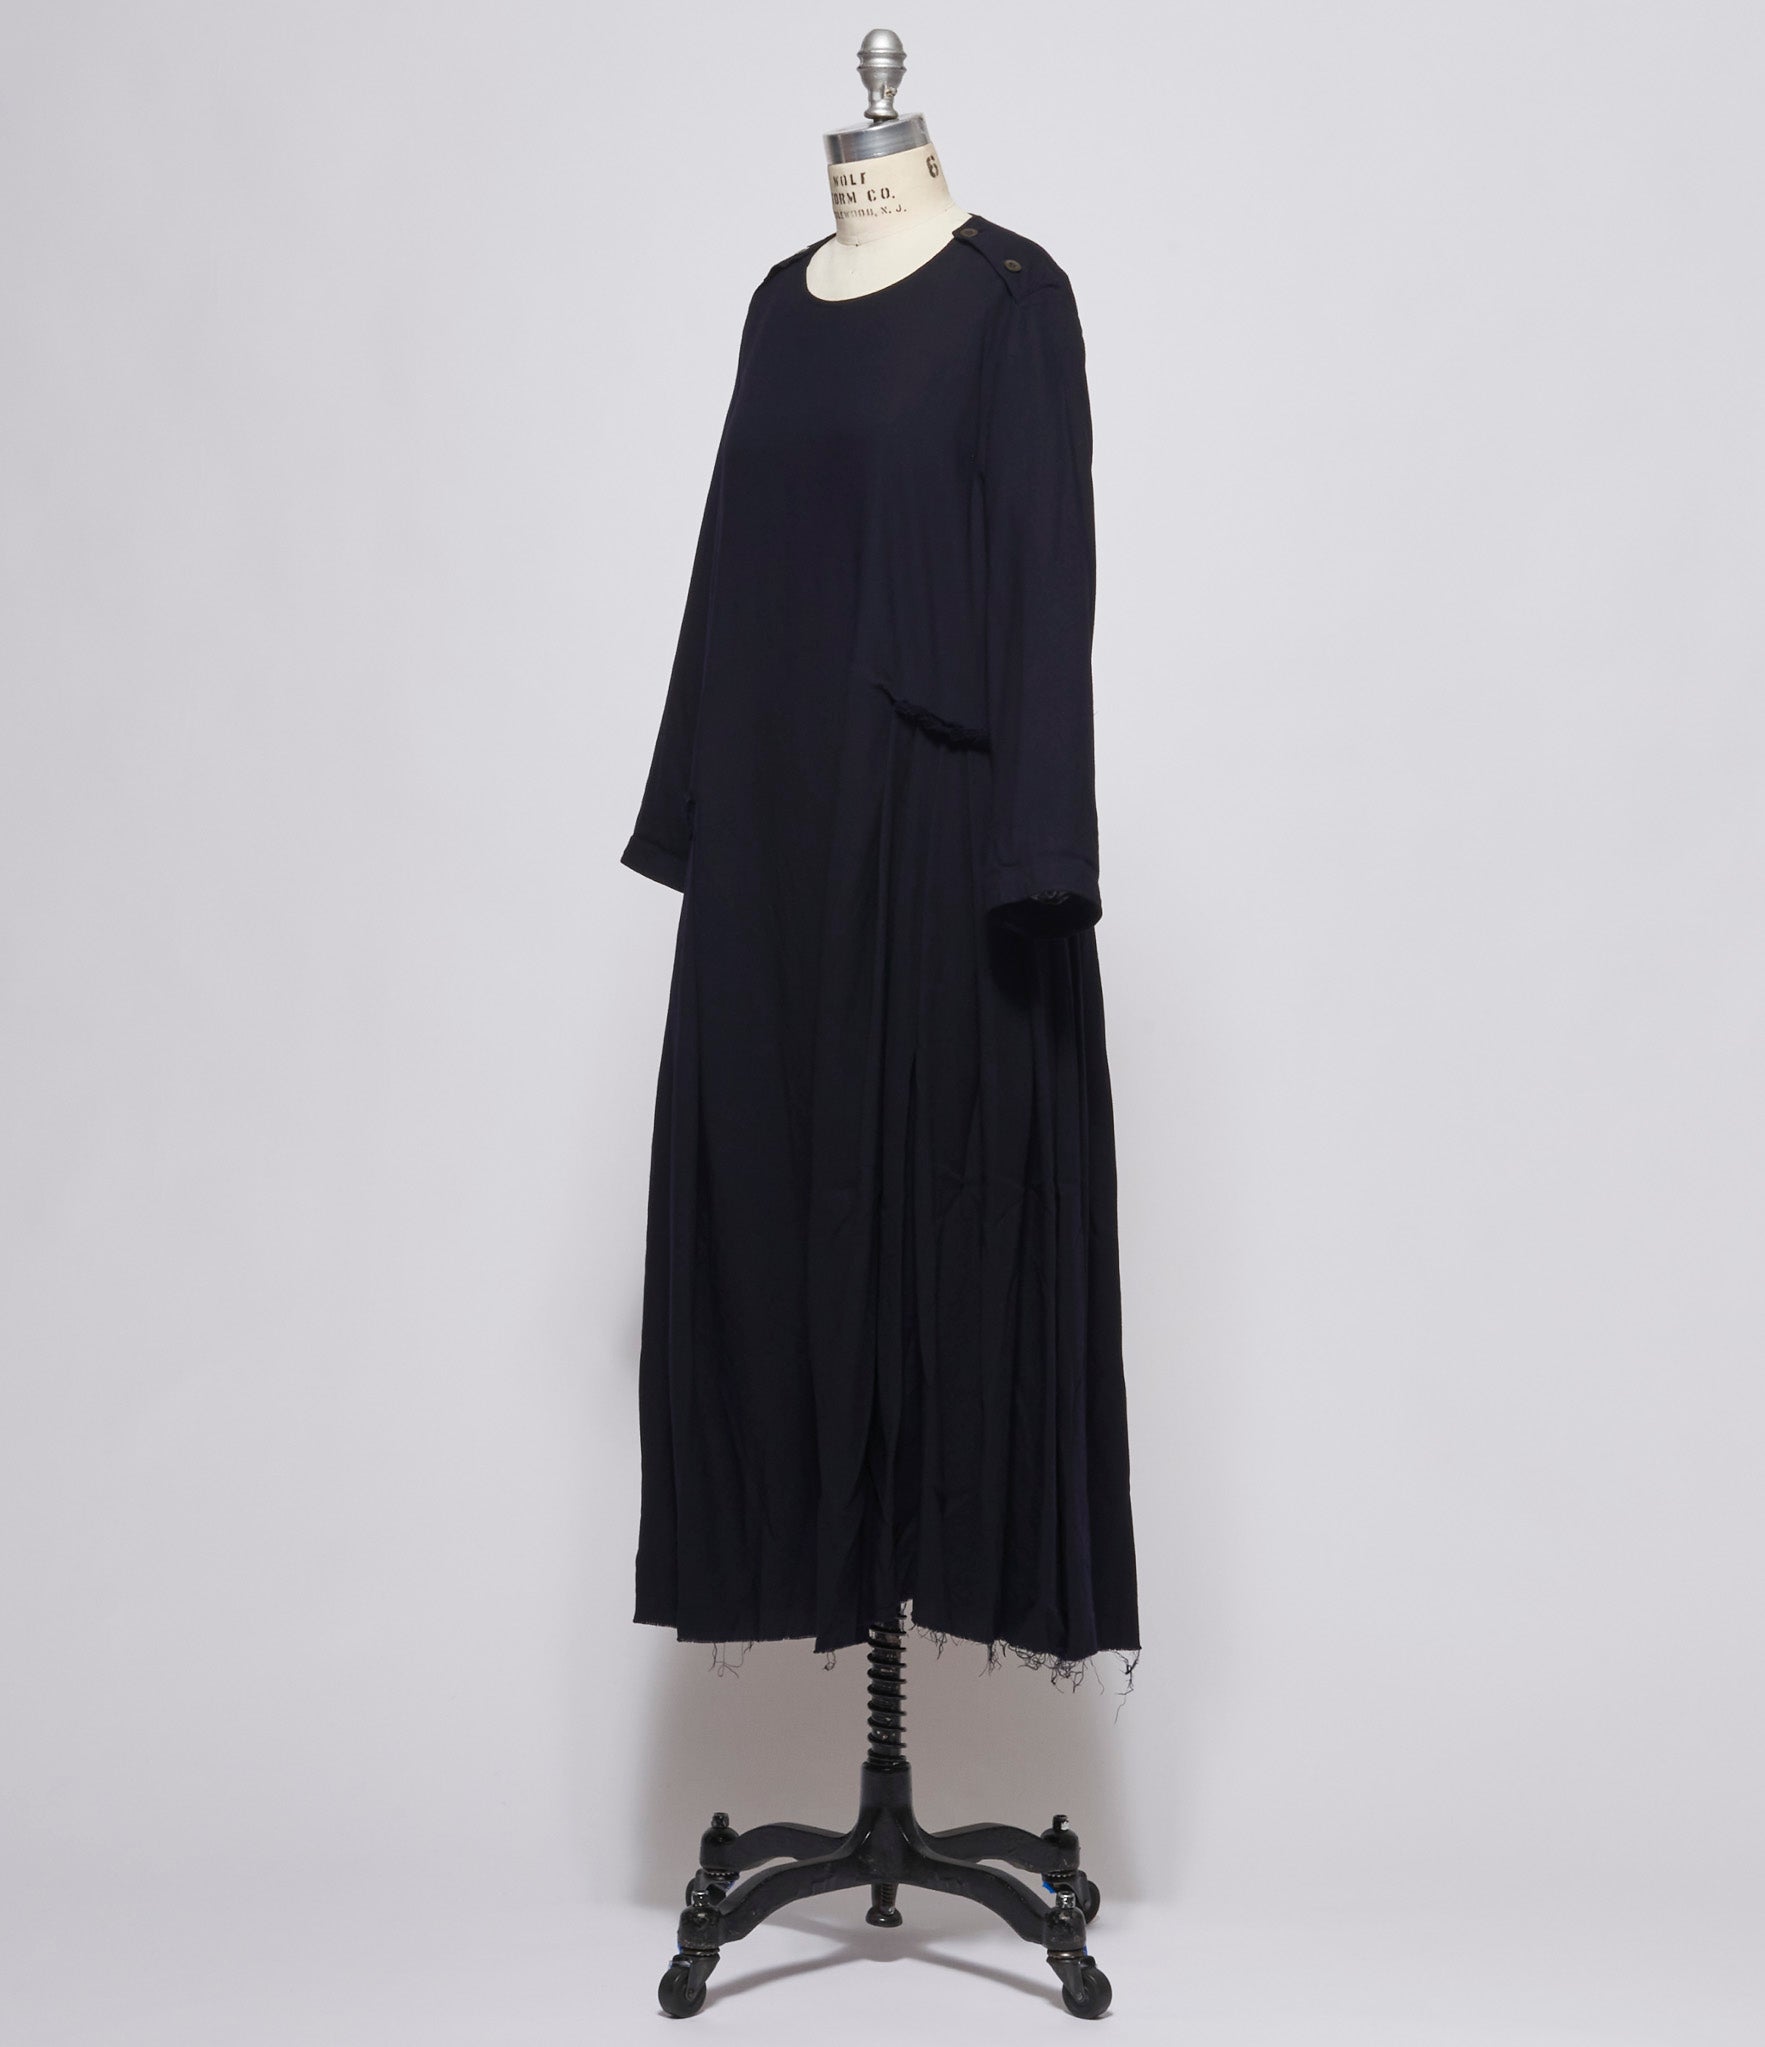 Atelier Suppan Womens Black Pleated Raw Cut Wool Dress